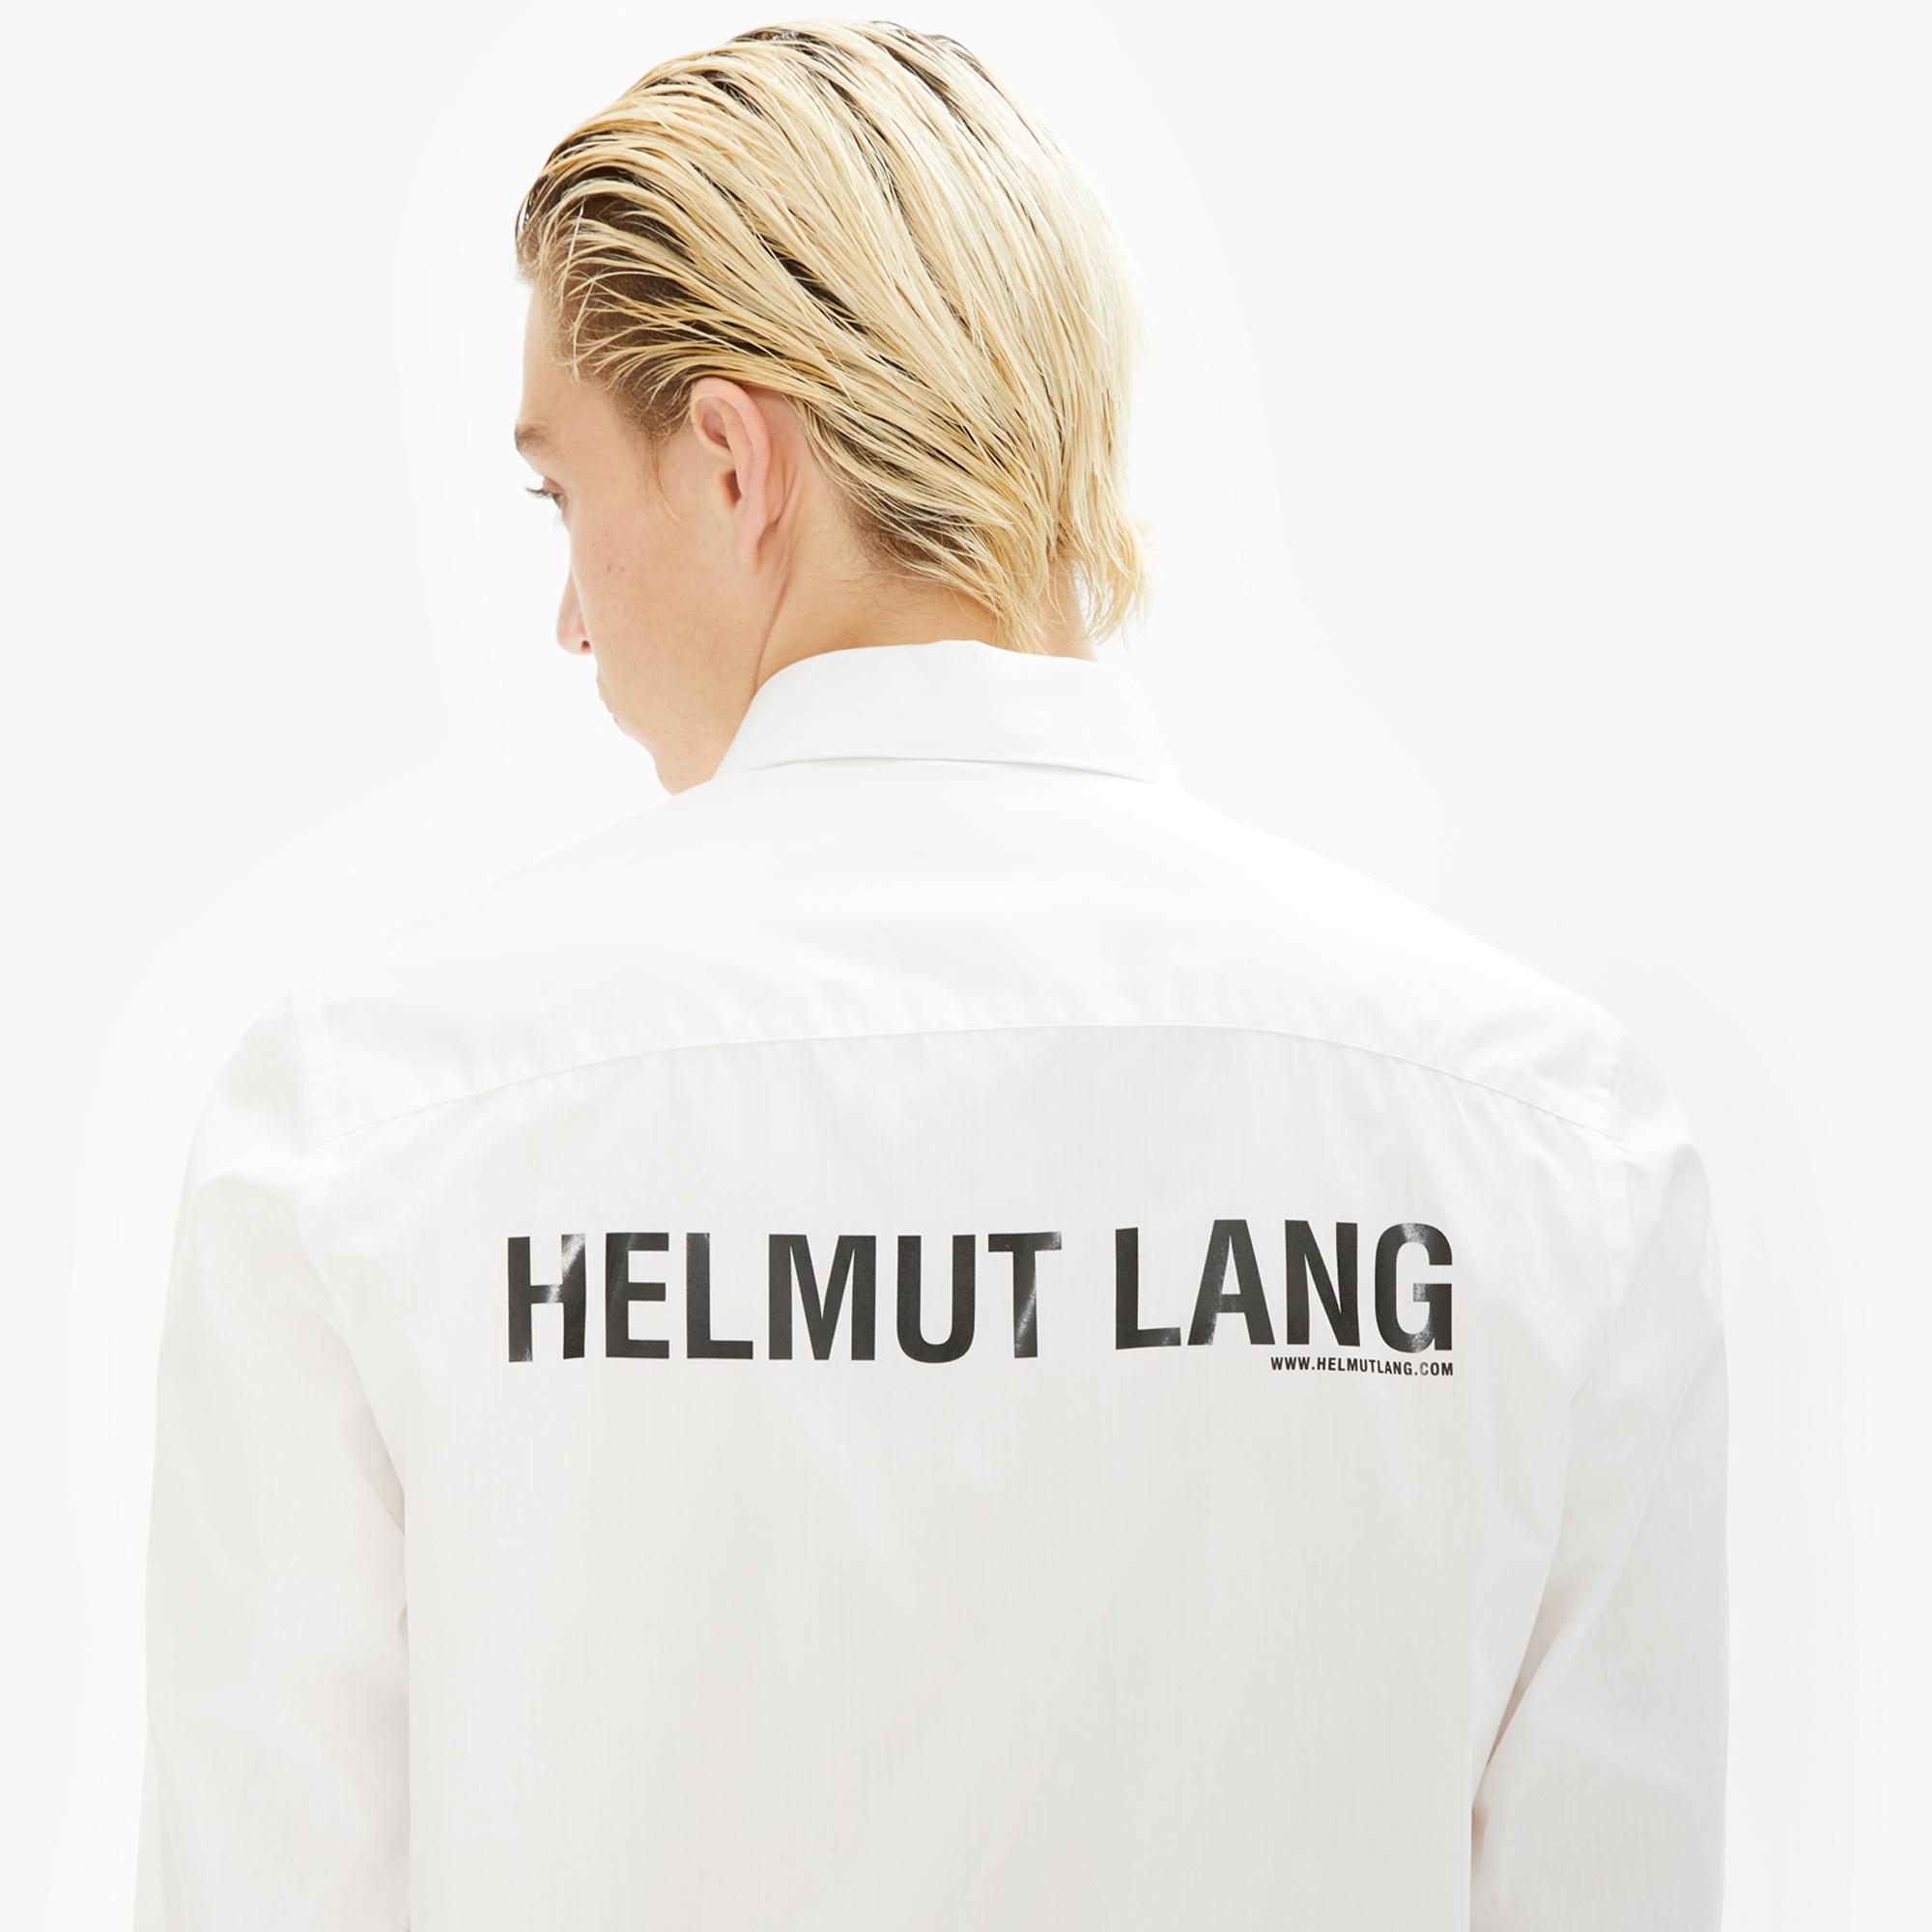 Helmut Lang White Black Printed Long Sleeve Dress Shirt Www